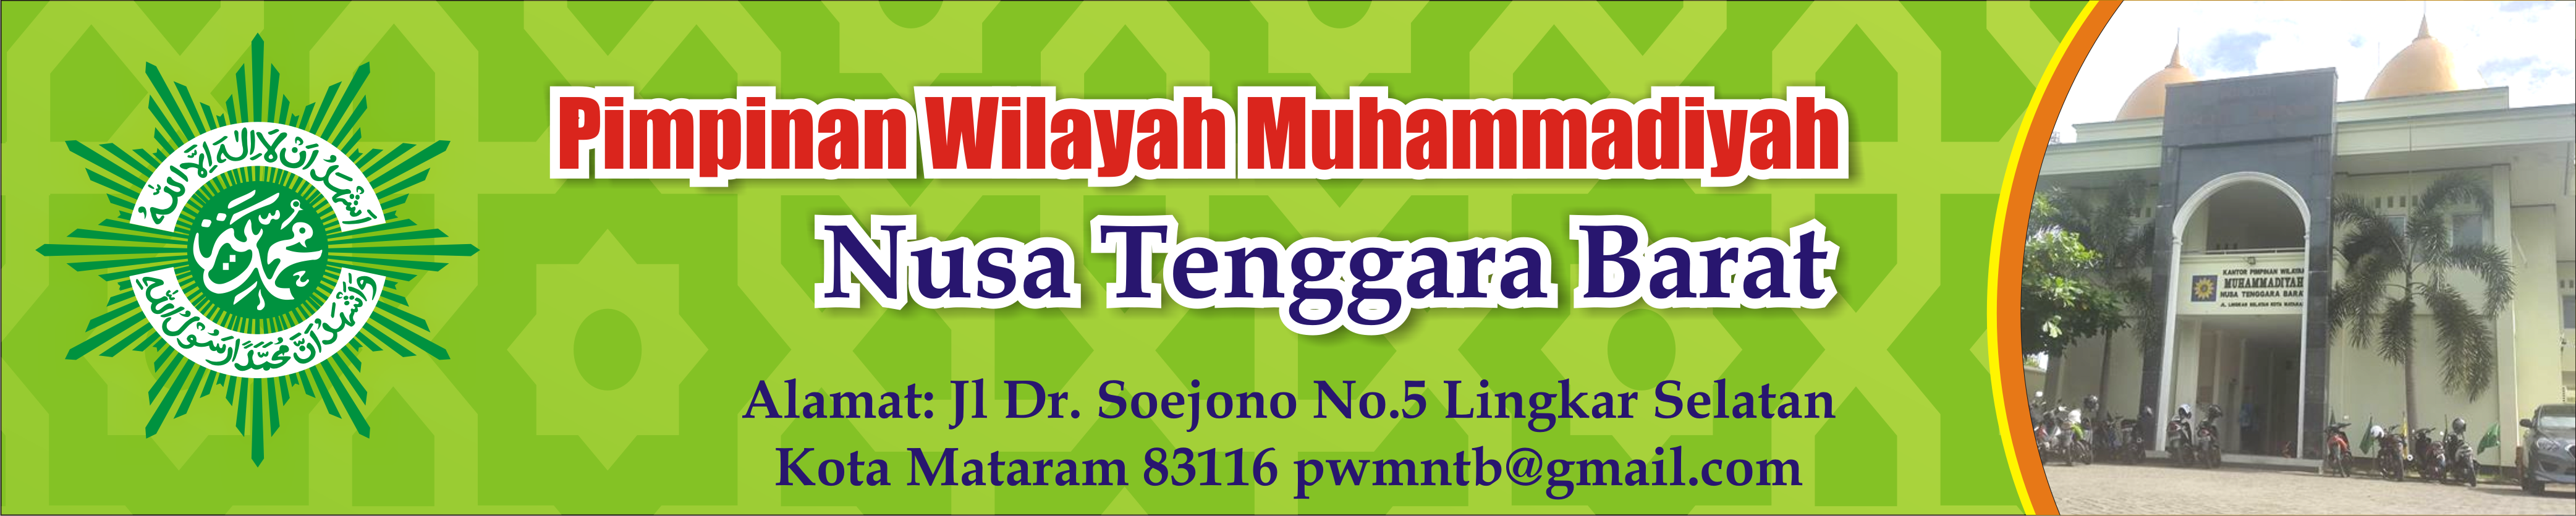 Lembaga Hubungan dan Kerjasama International Pimpinan Wilayah Muhammadiyah Nusa Tenggara Barat